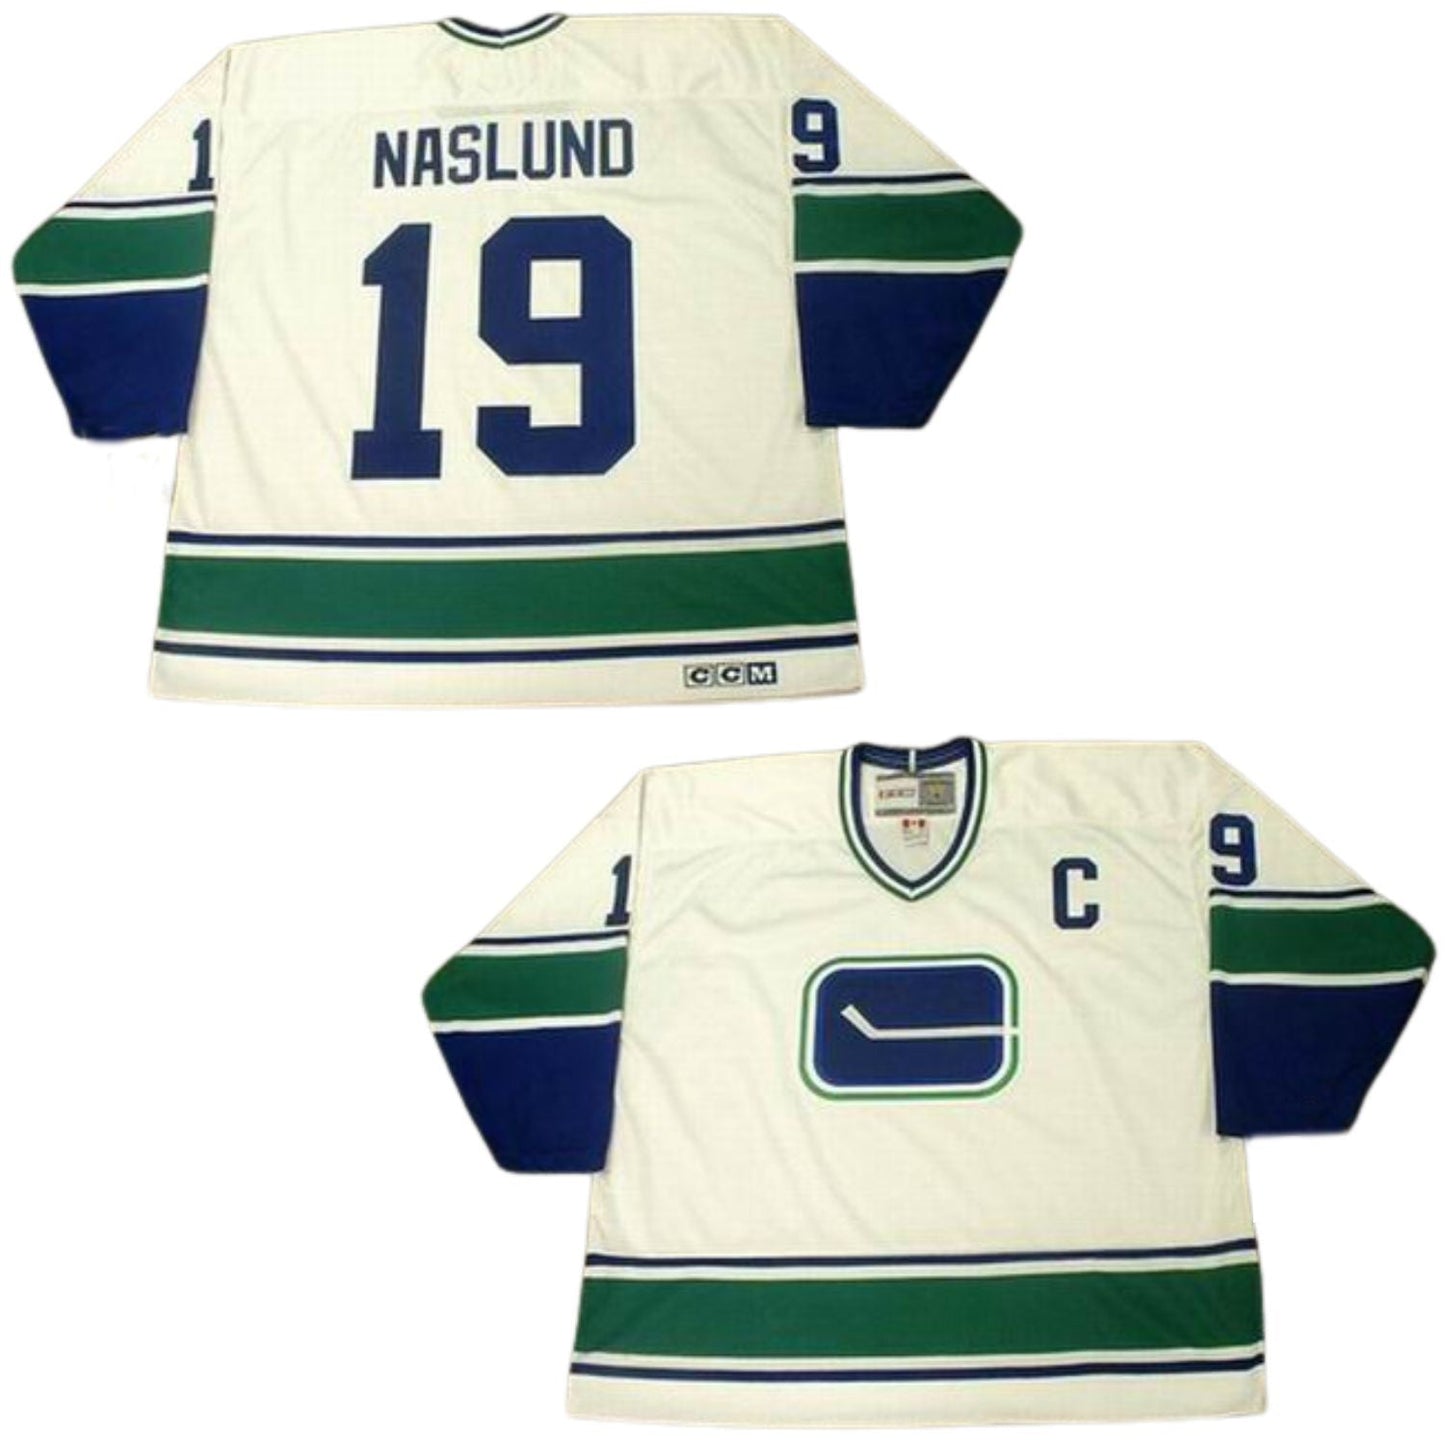 NHL Markus Näslund Vancouver Canucks 19 Jersey